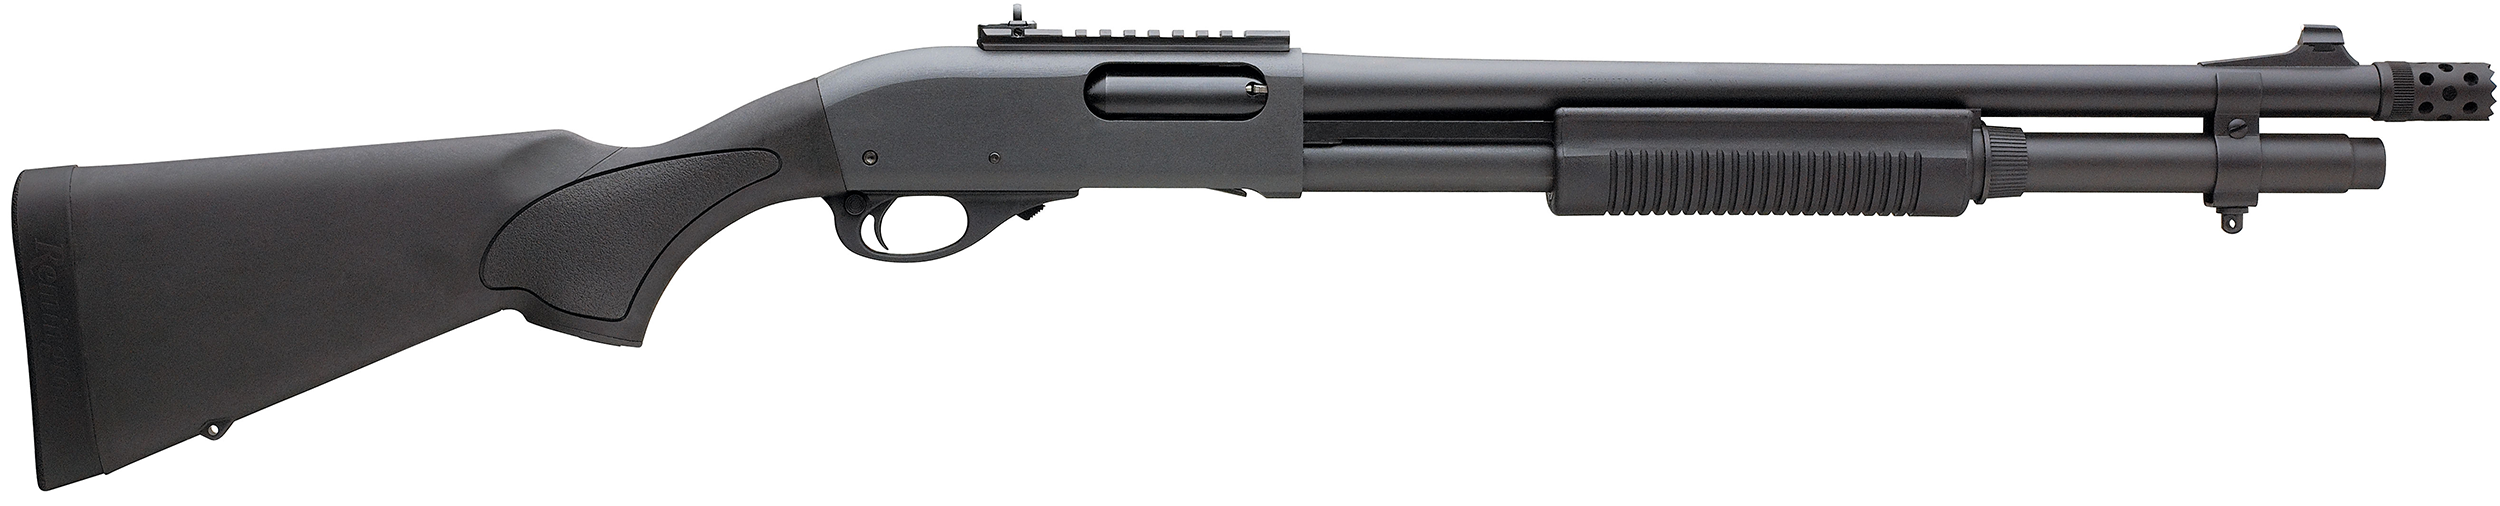 https://cityarsenal.com/product/remington-870-tactical-12ga-pump-action-shotgun-black-r81198/